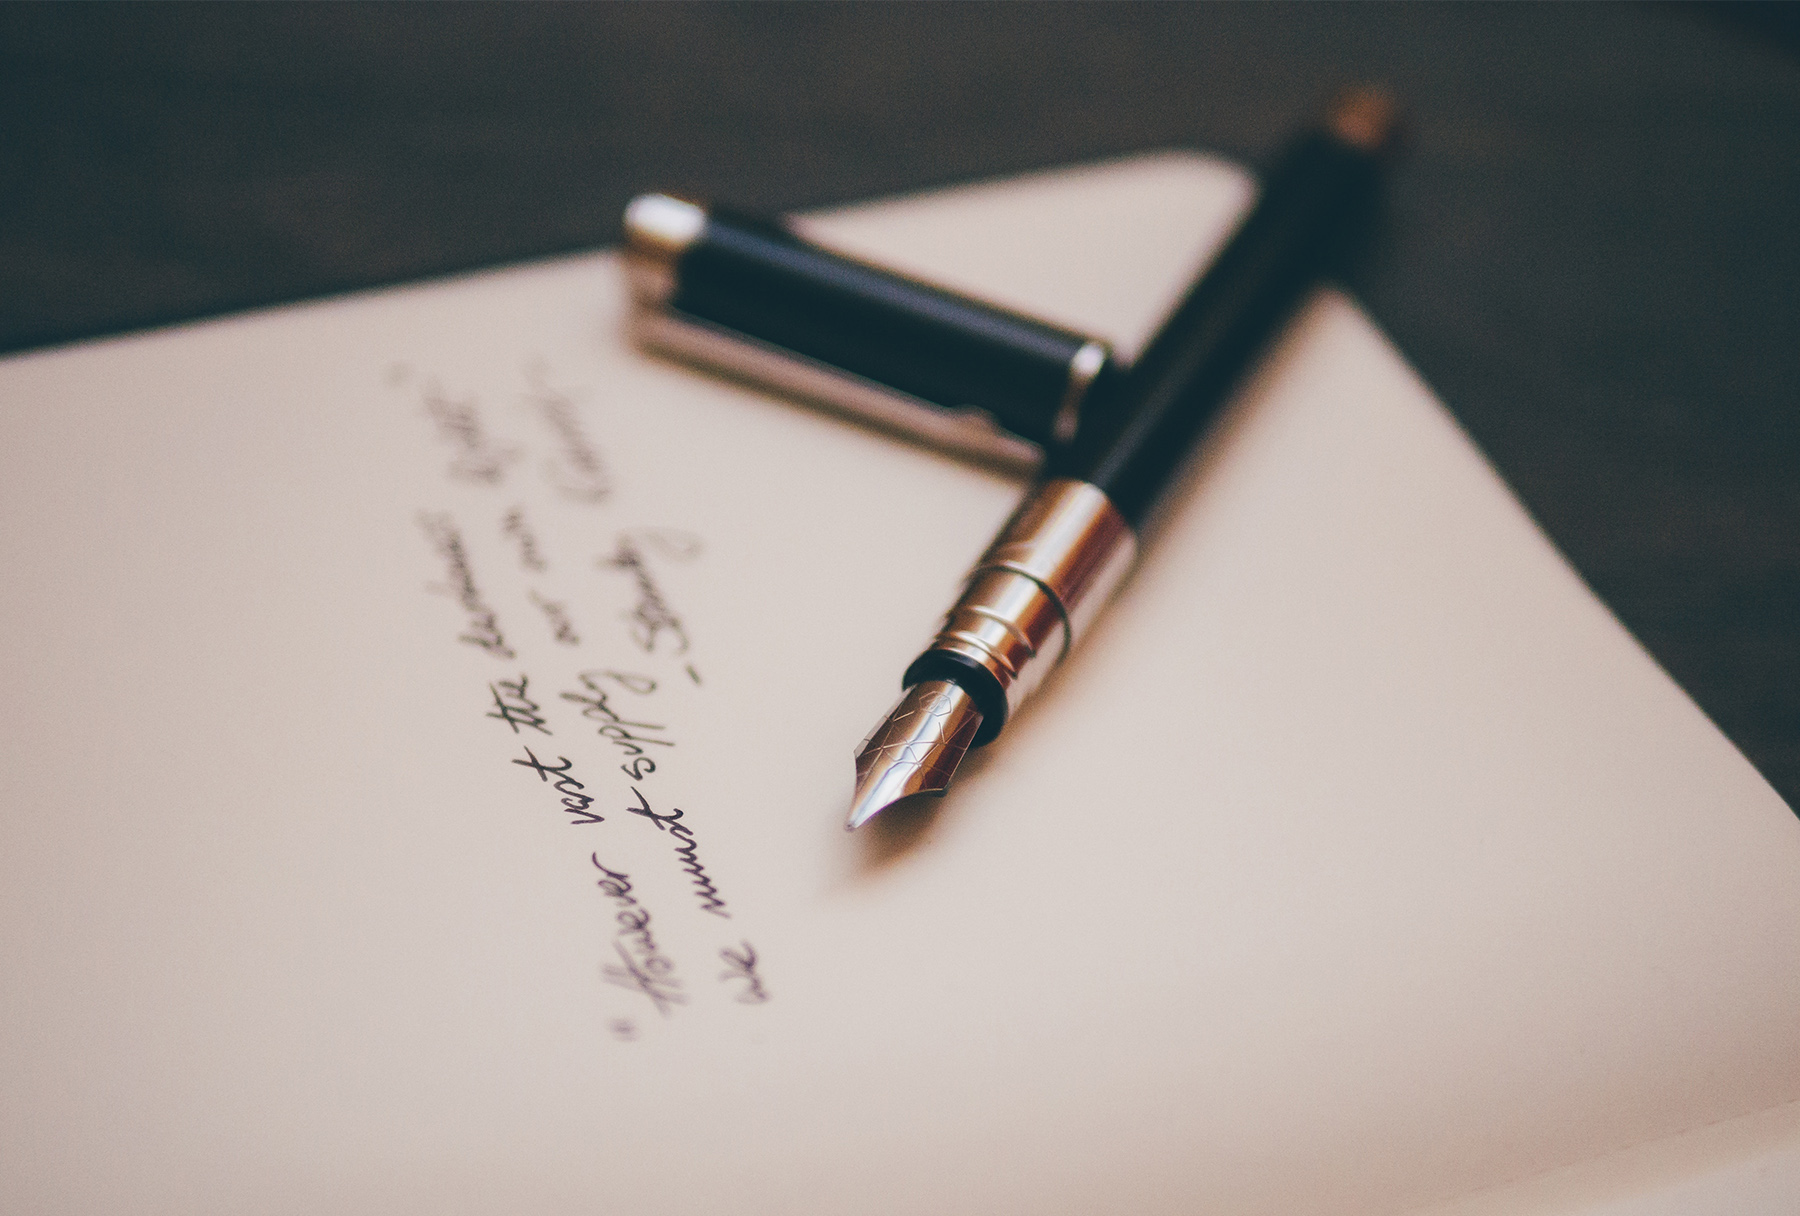 Handwritten note with a fountain pen beside